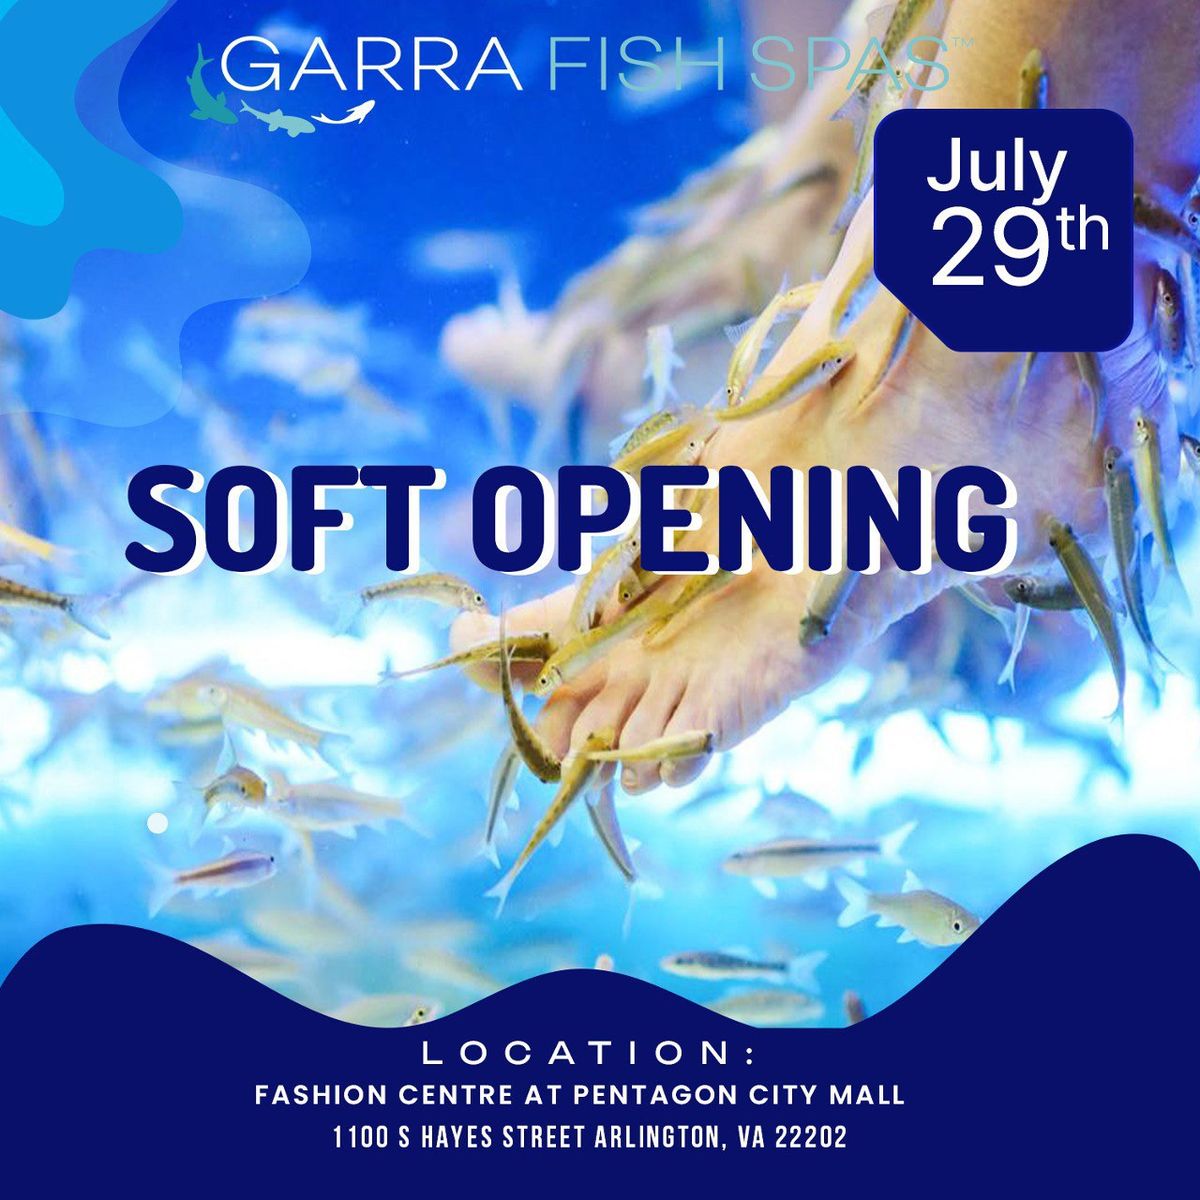 Garra Fish Spas Soft Opening! 